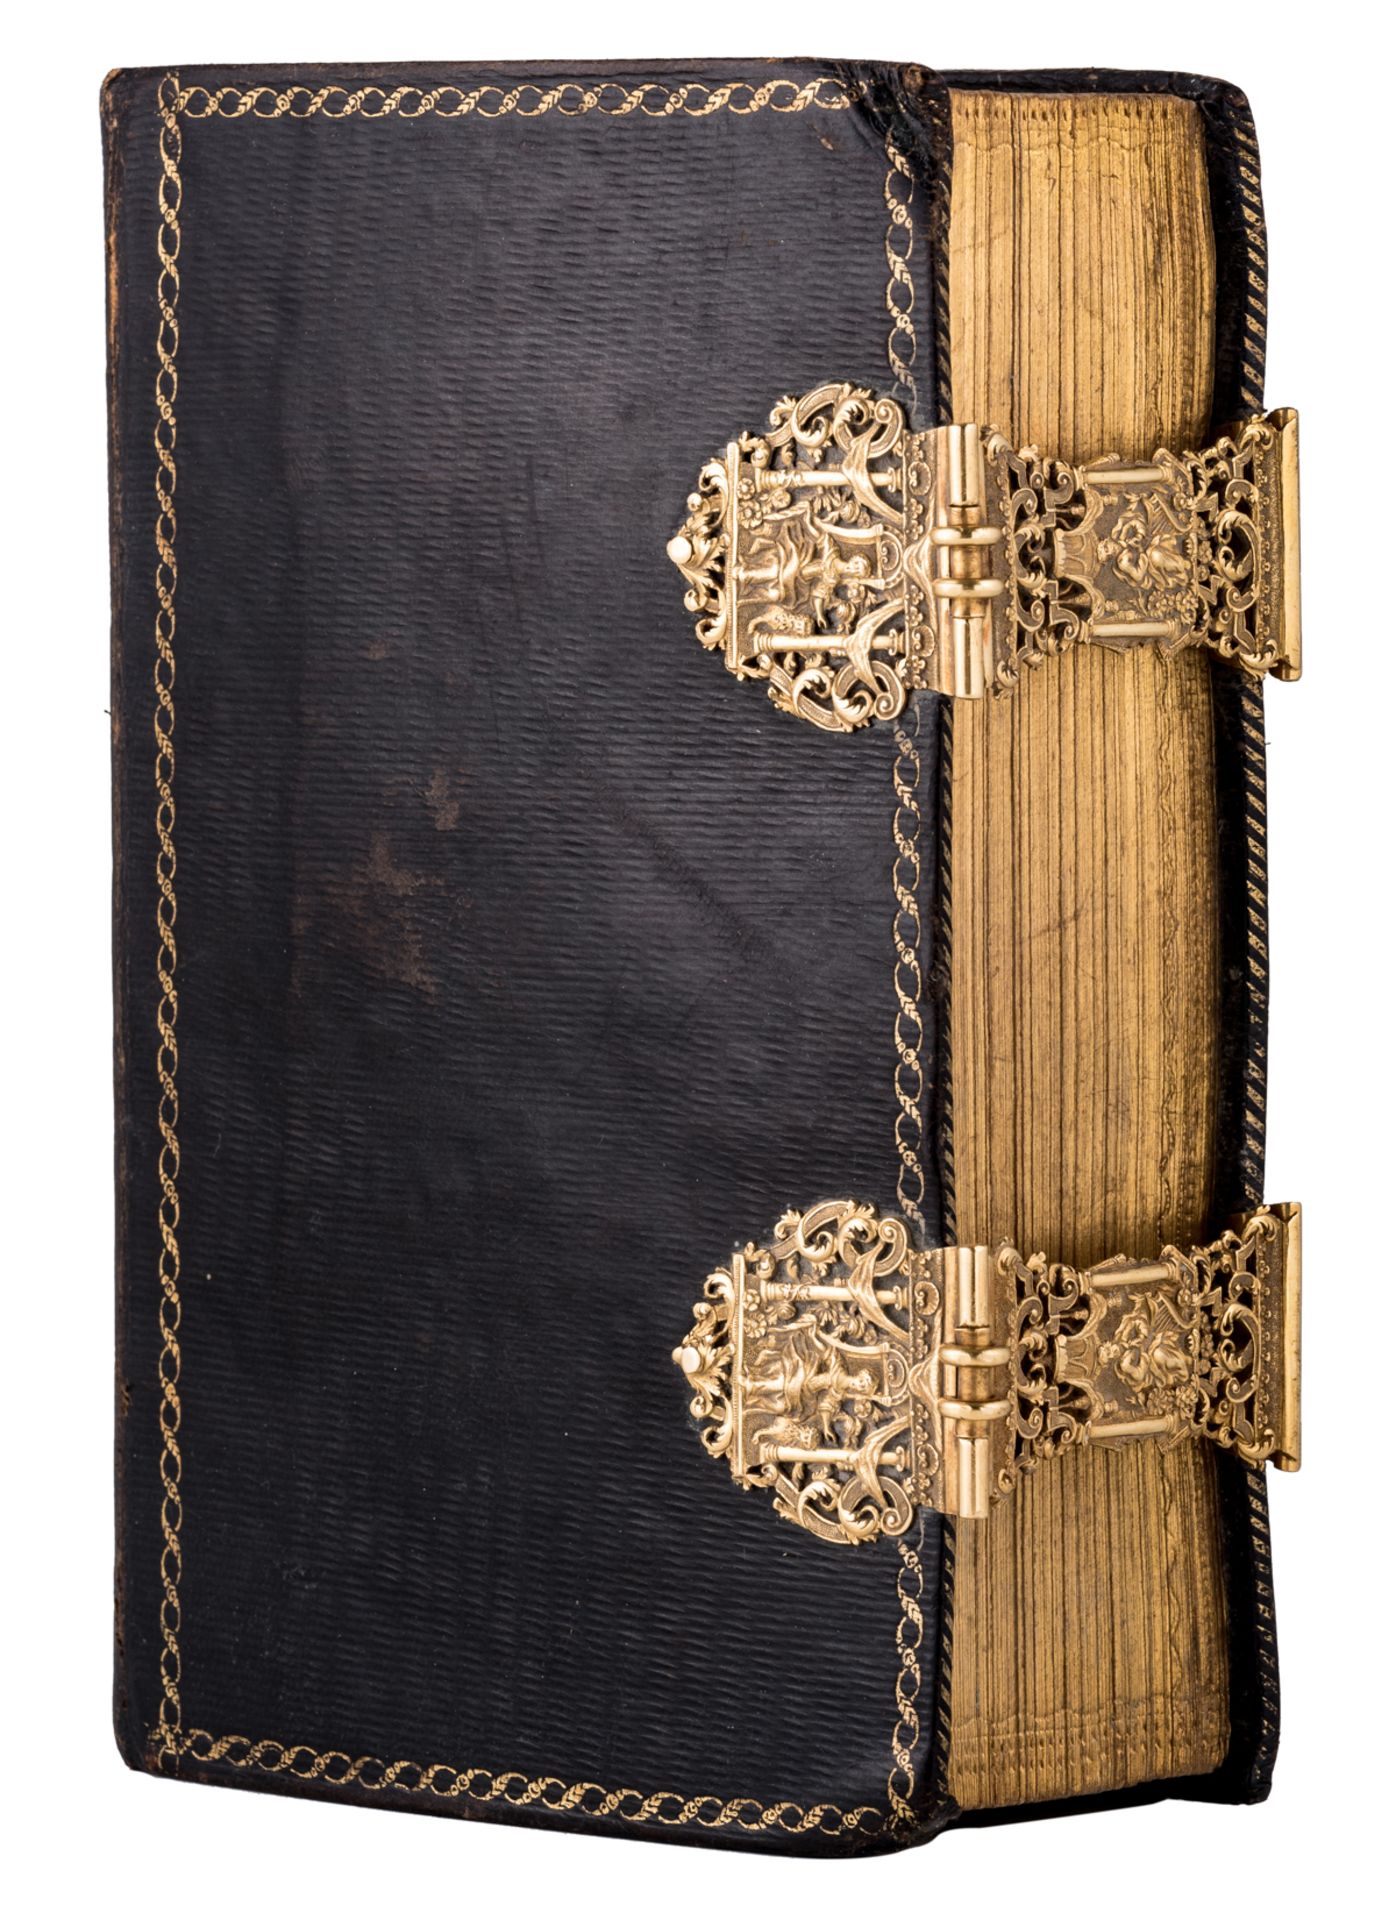 Statenbijbel, 'De Erven J. Allaert 'S. Gravenhage 1817', with a leather binding and gilt edges, the